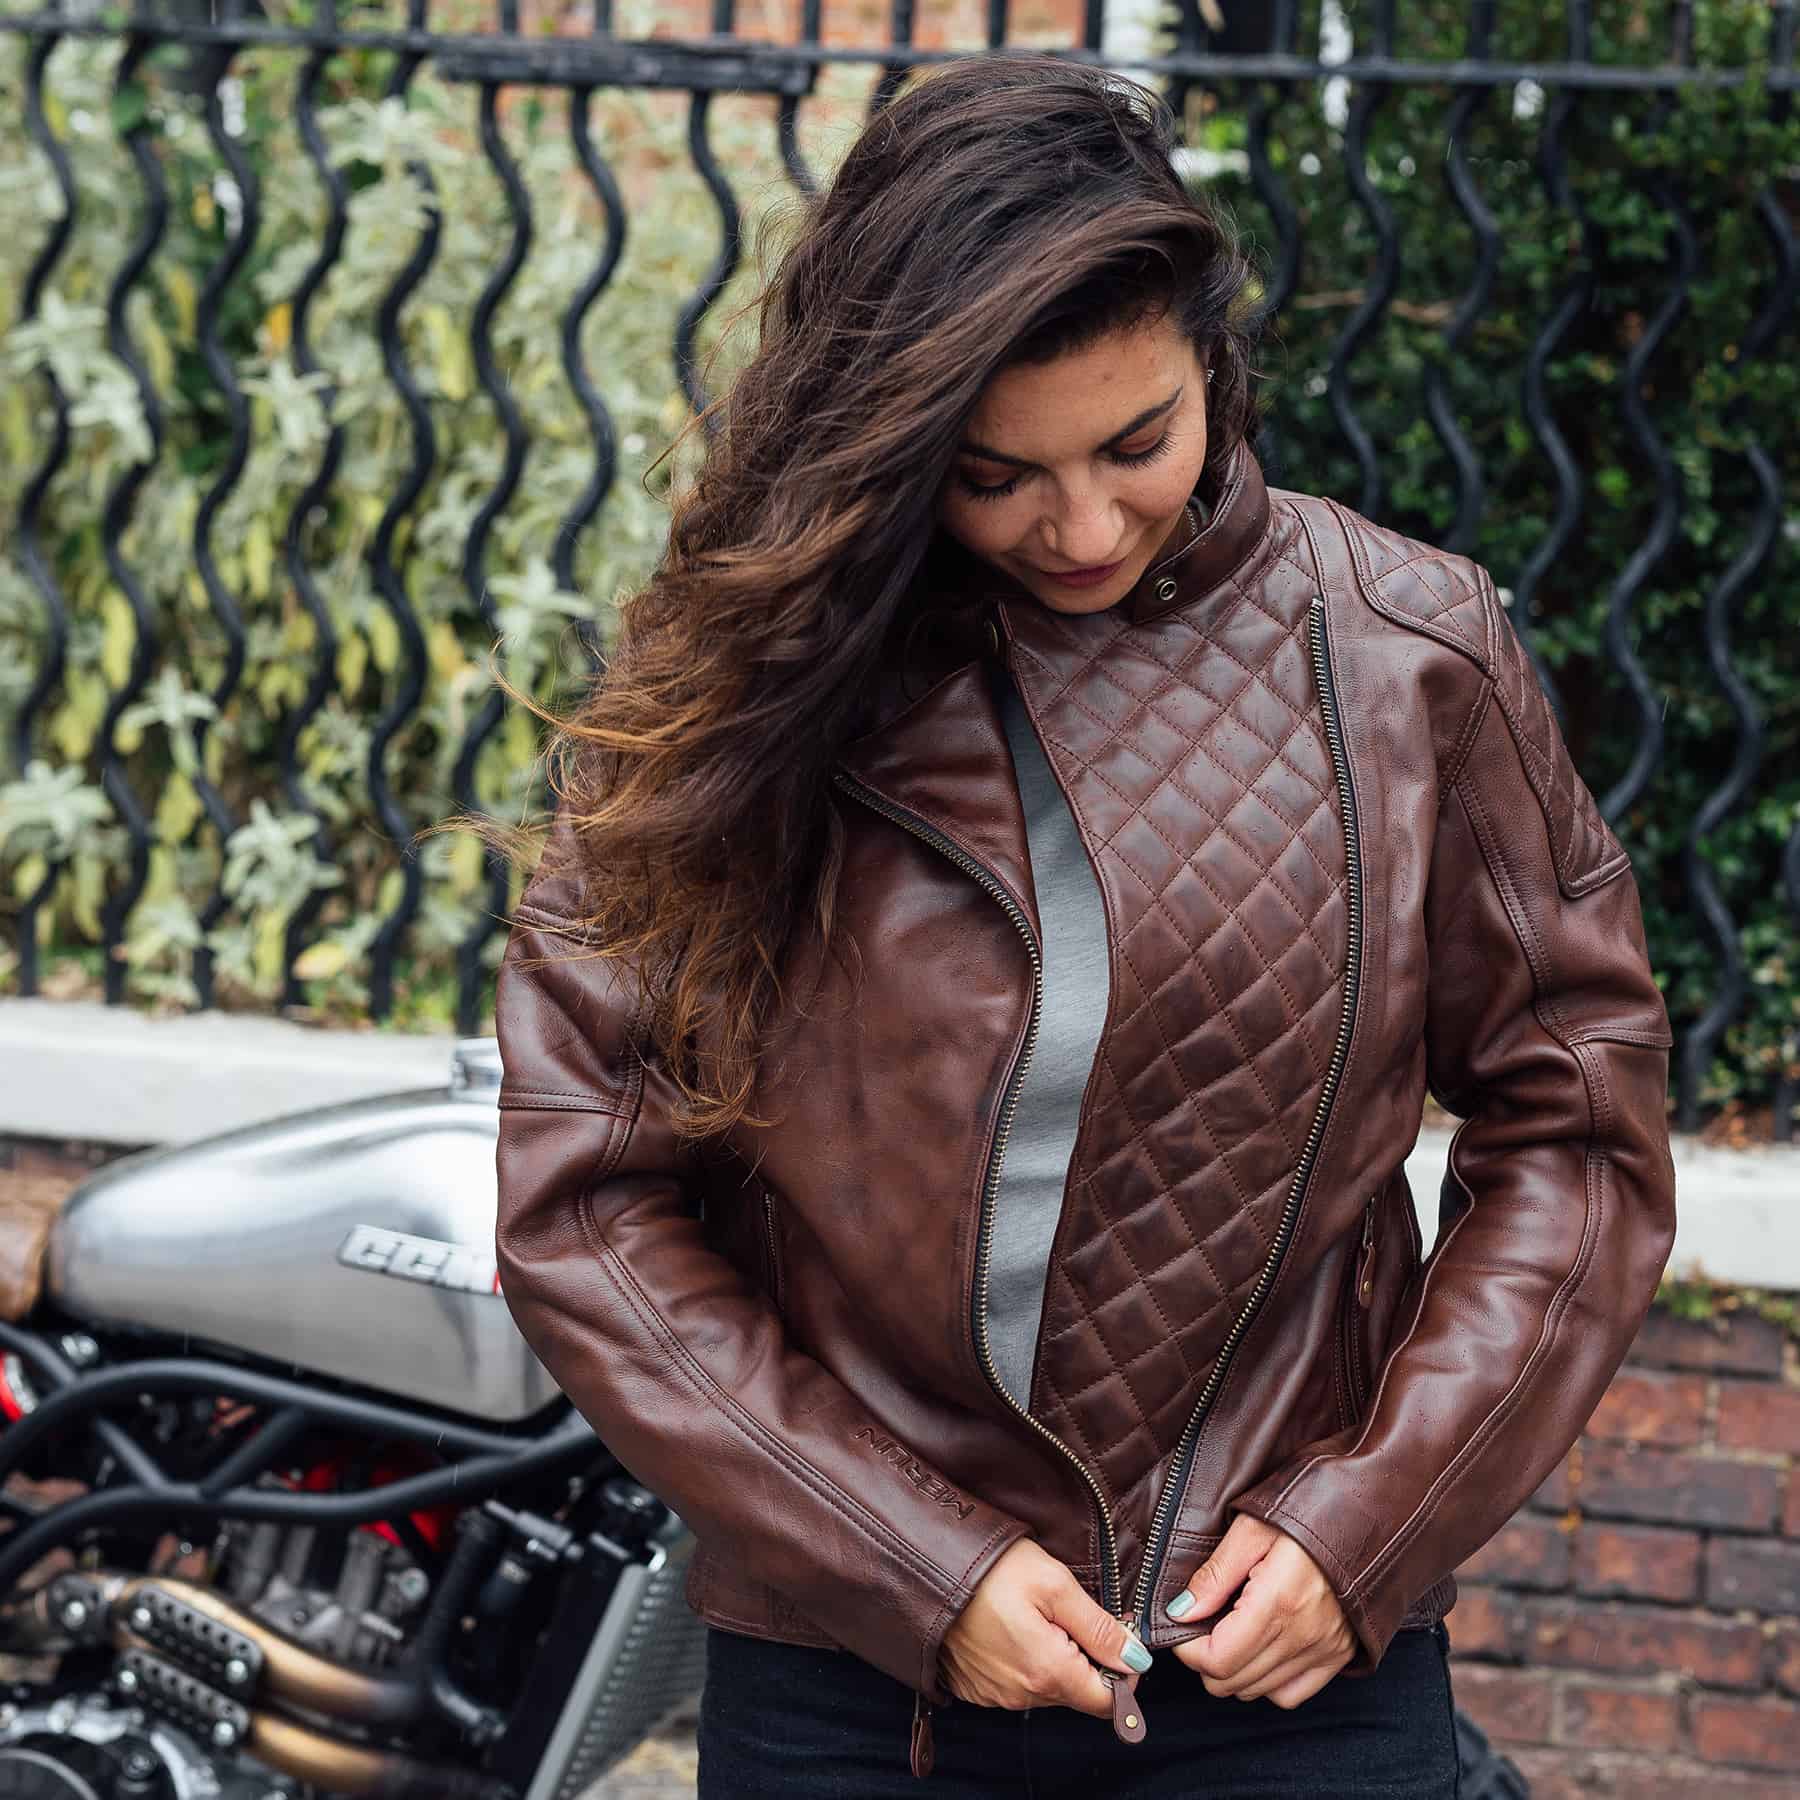 Bristol Ladies Classic Leather Motorcycle Jacket - Merlin Bike Gear